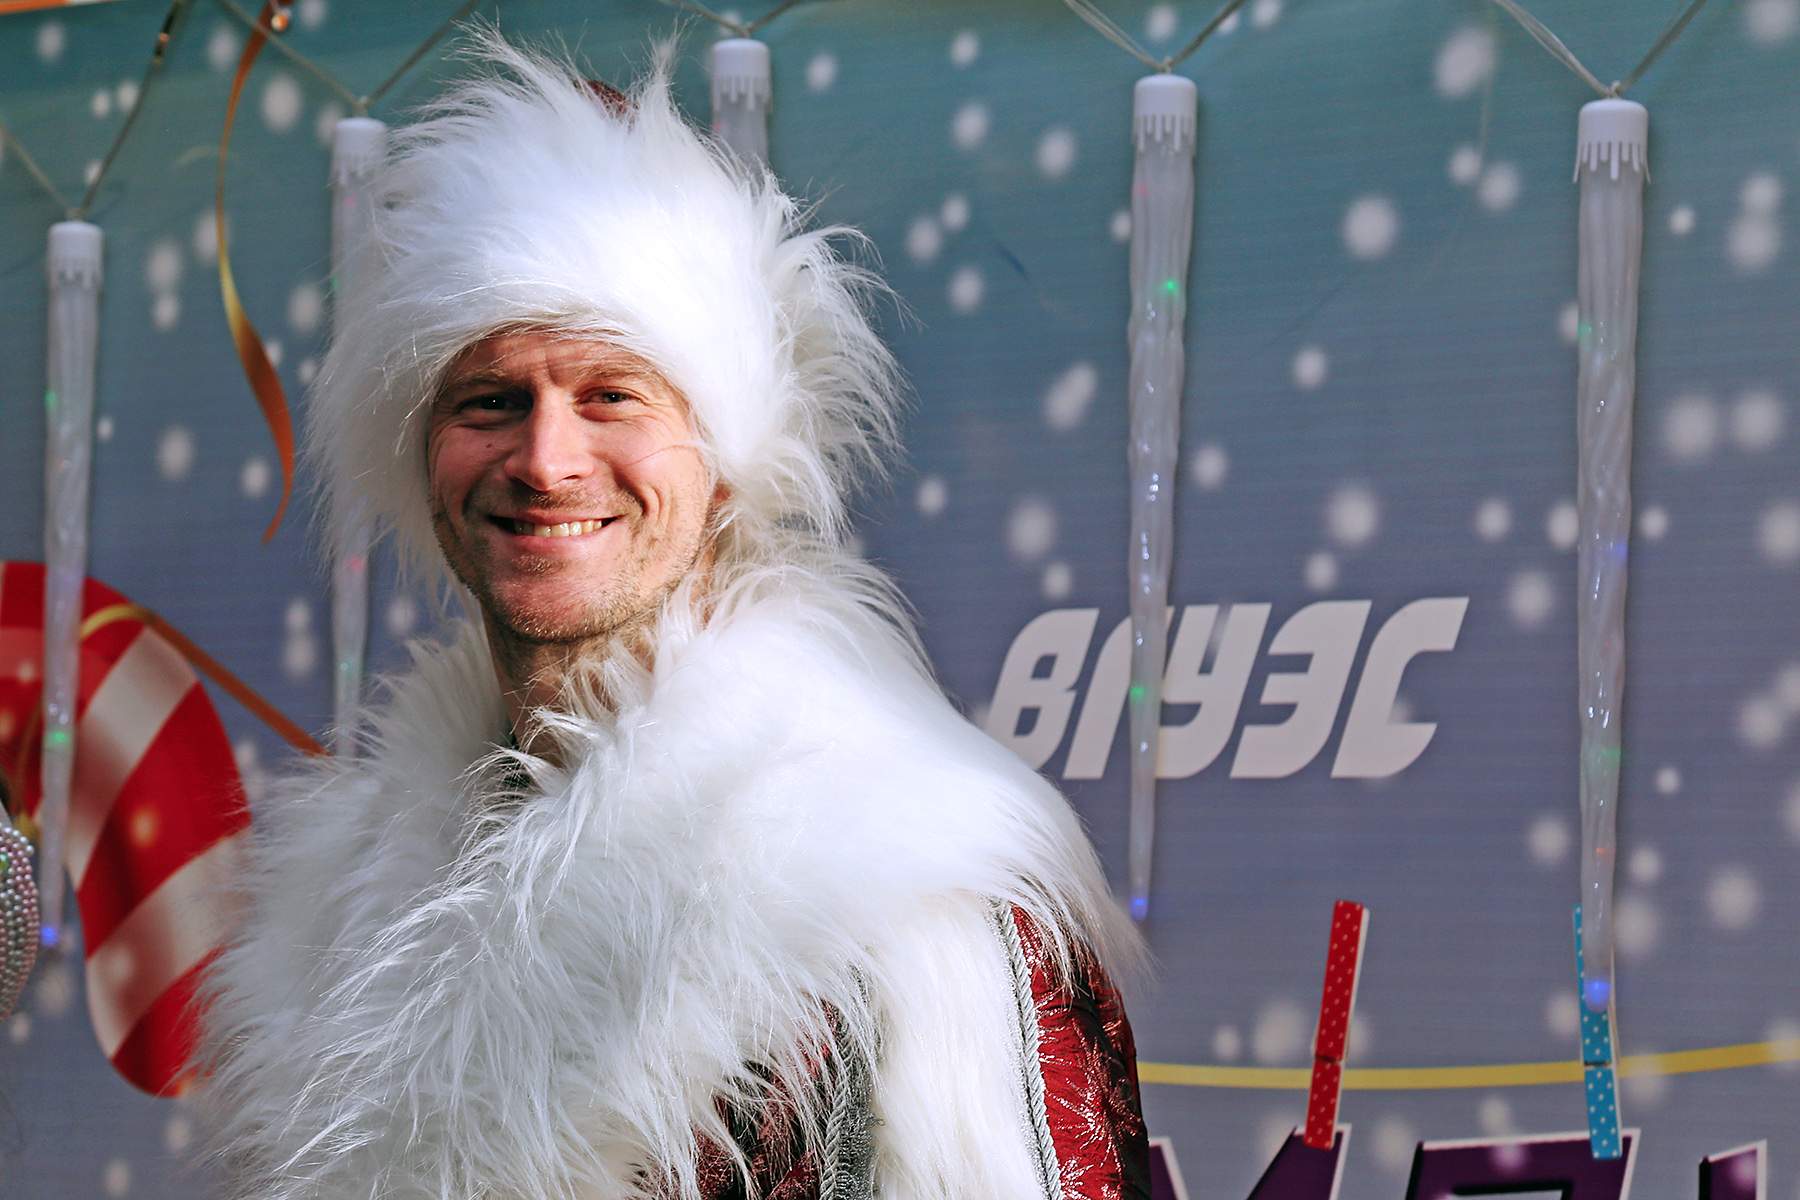 Нг ру новости. Альпинист в костюме Деда Мороза на горе. Альпинист в костюме Деда Мороза Эверест.